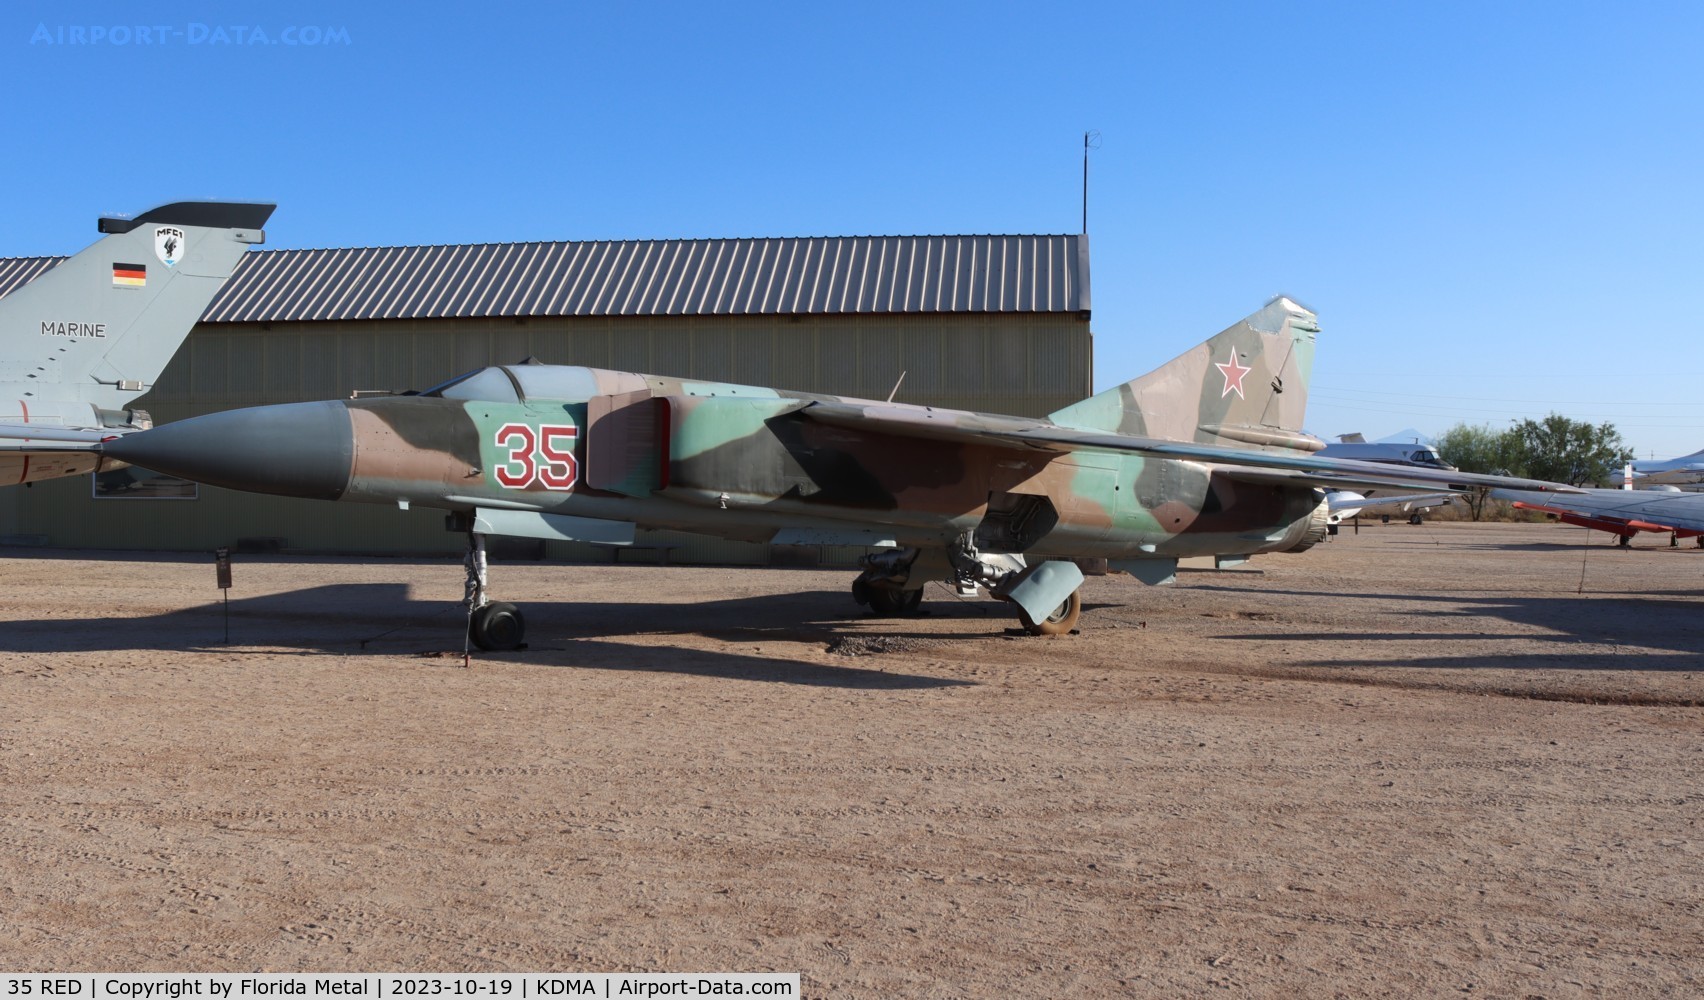 35 RED, Mikoyan-Gurevich MiG-23MLD C/N 0390320549, Mig-23 zx